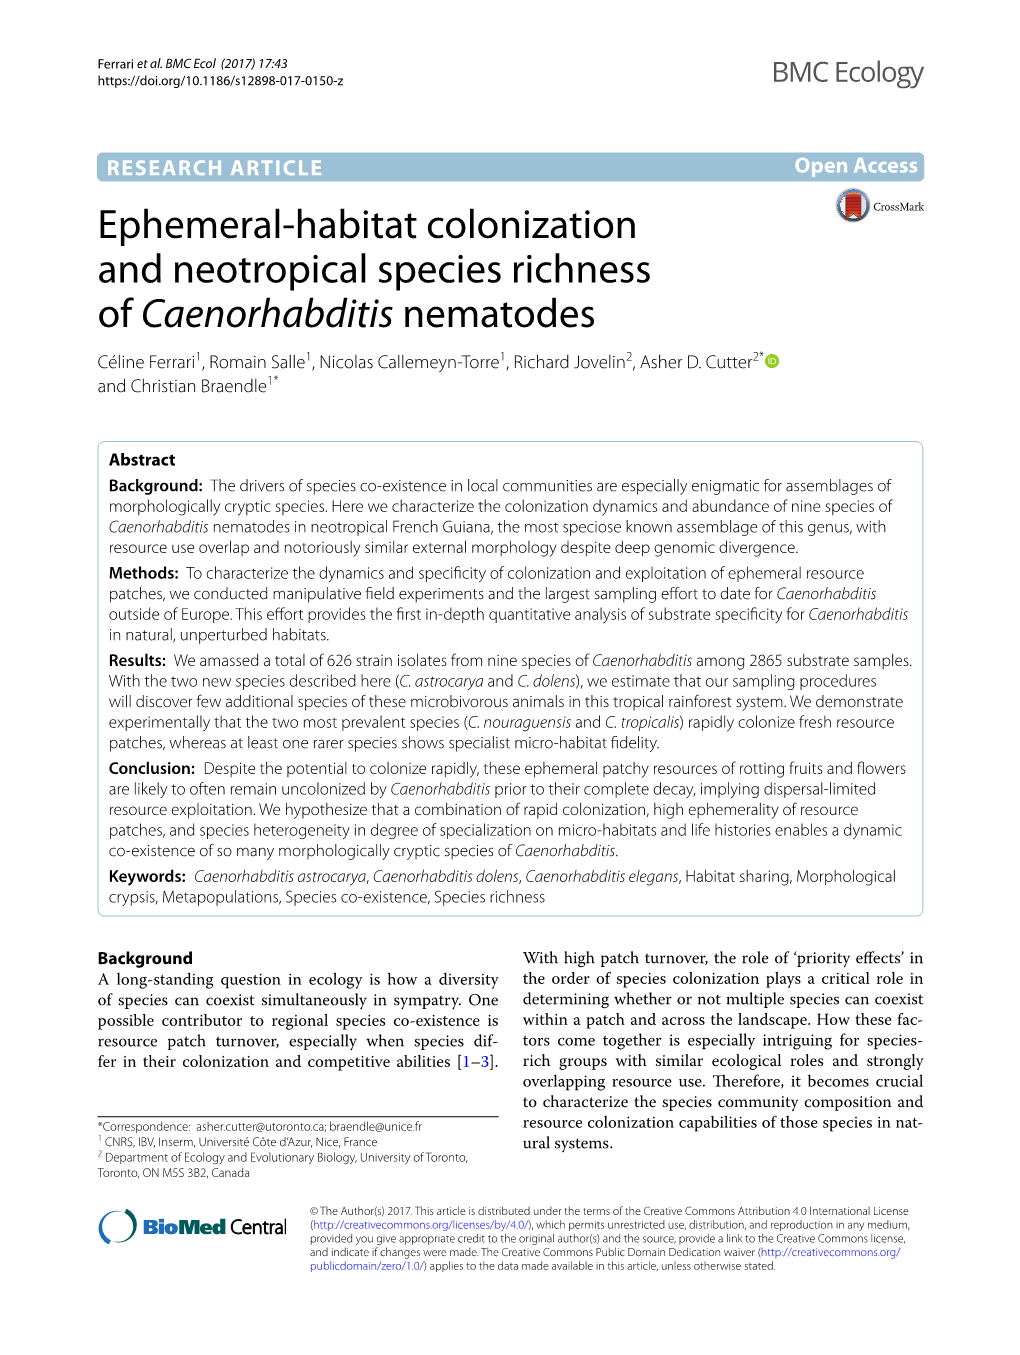 Ephemeral-Habitat Colonization and Neotropical Species Richness of Caenorhabditis Nematodes